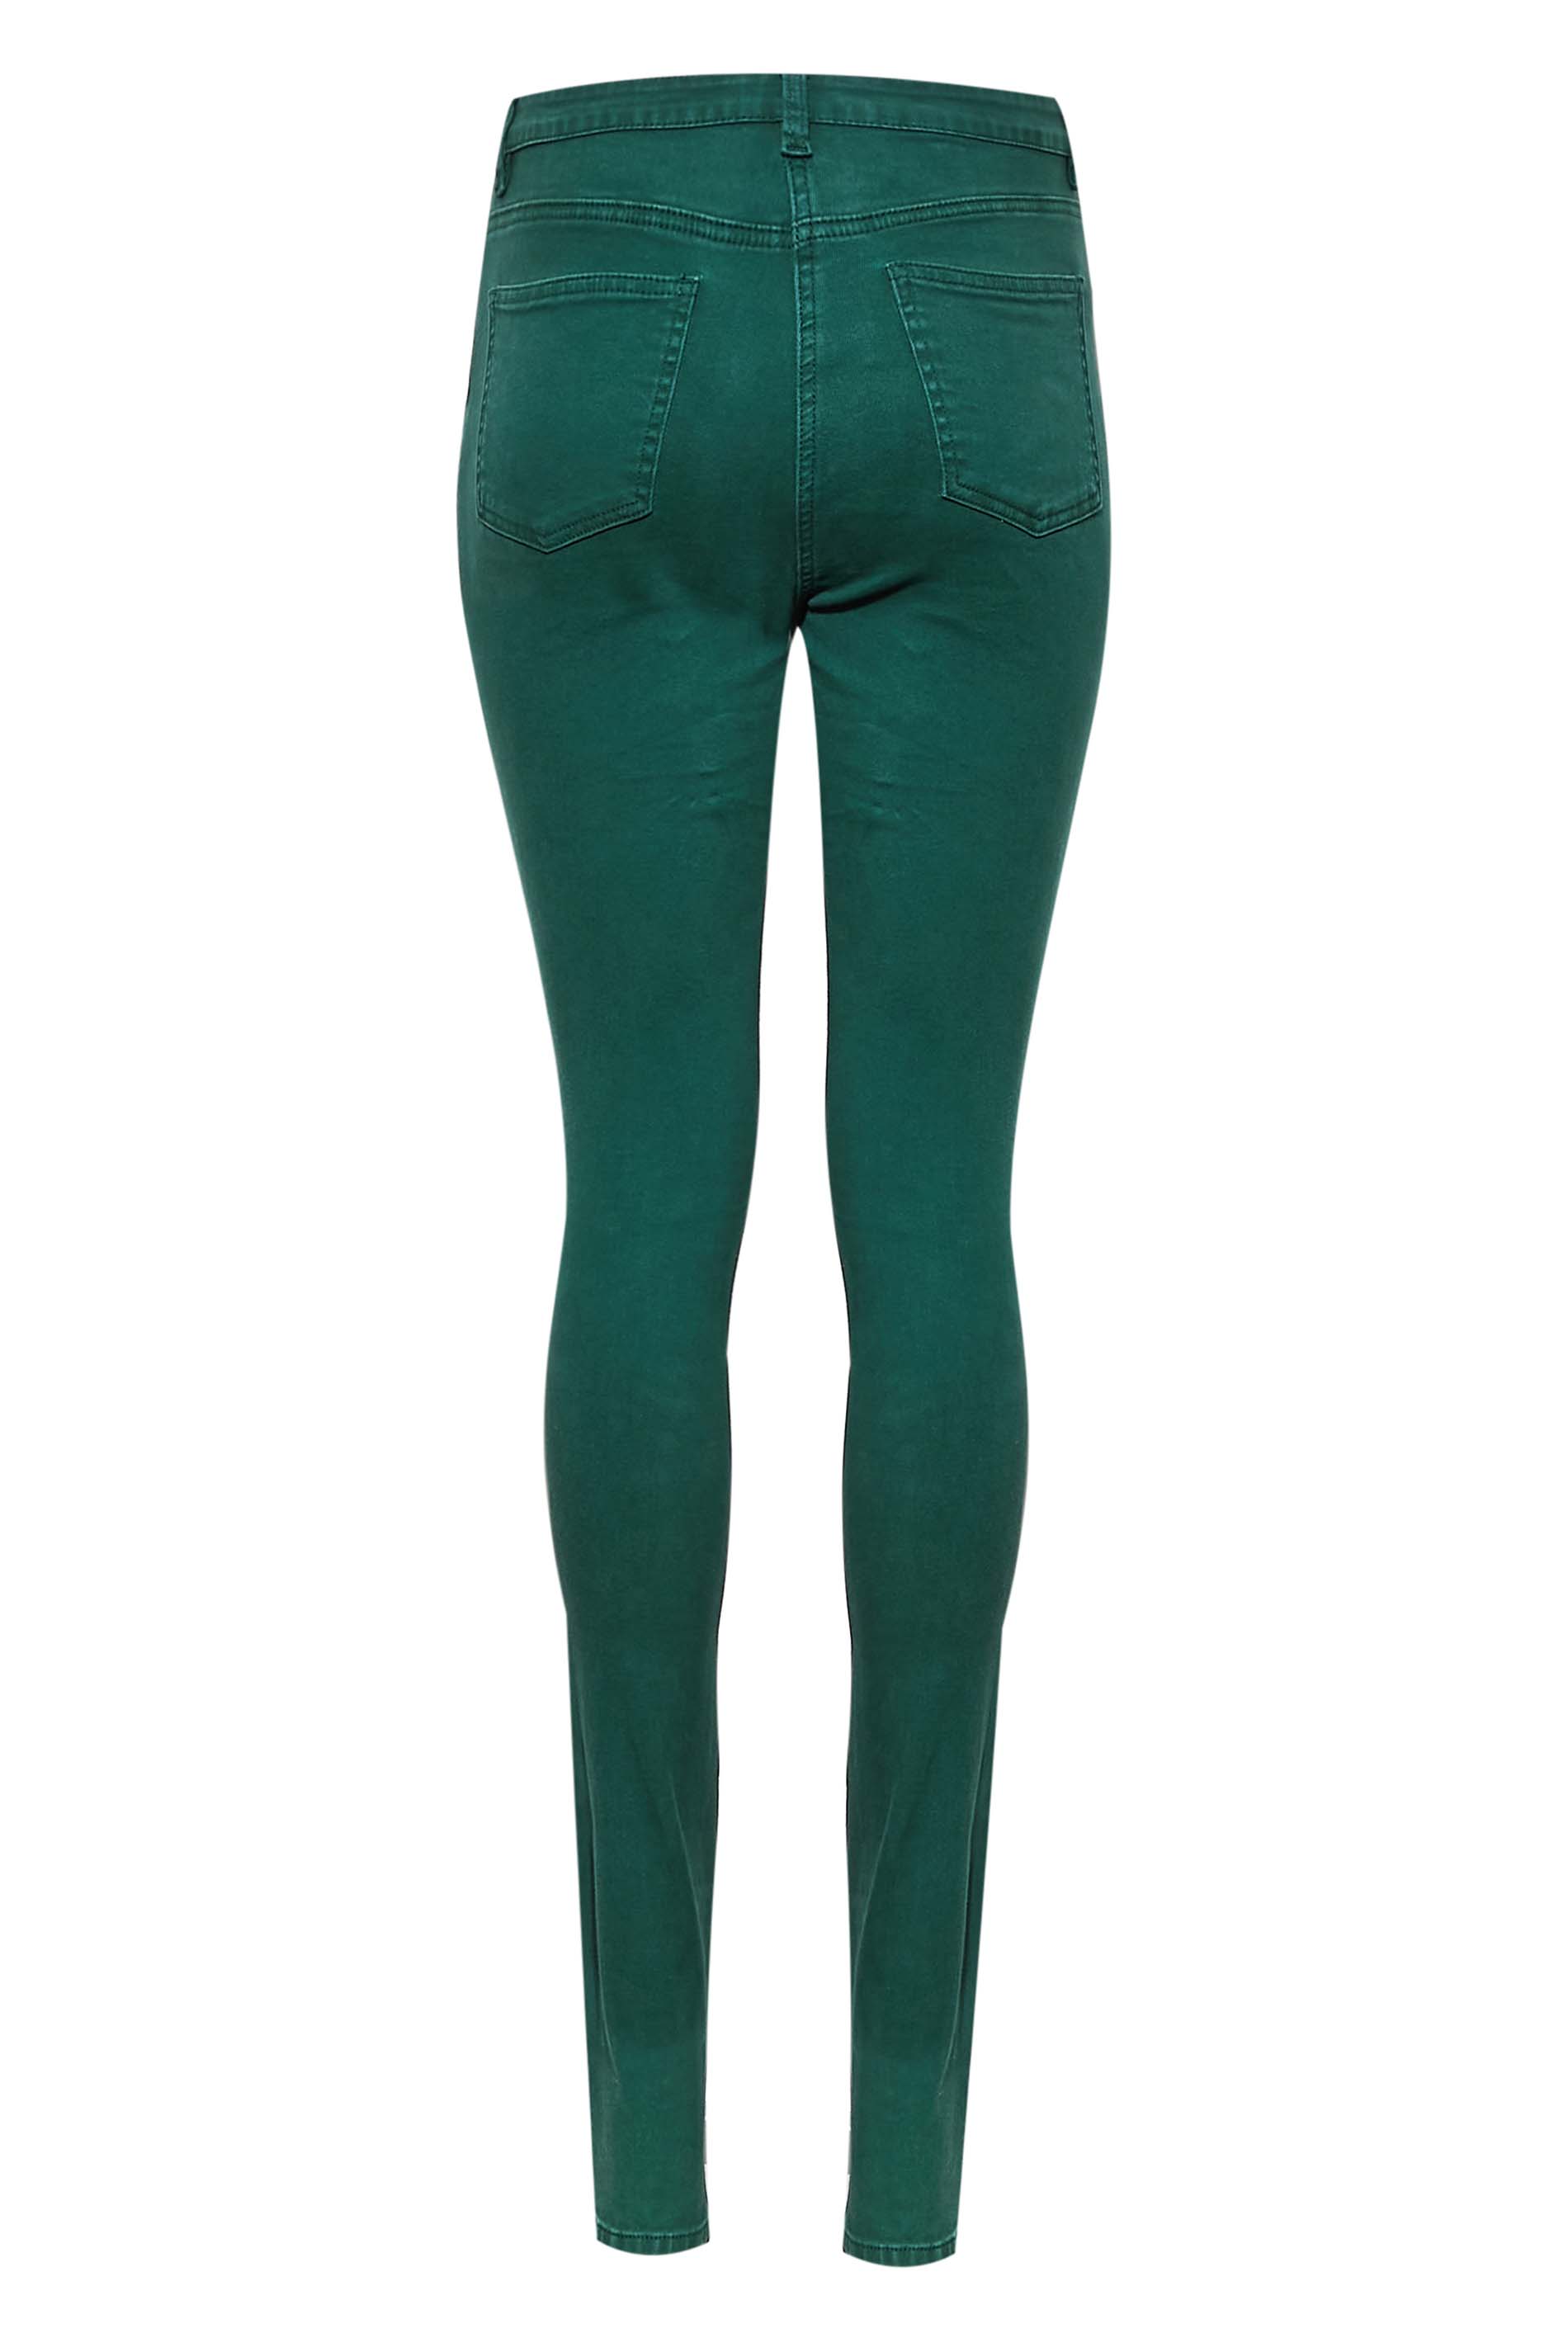 LTS Tall Women's Dark Green AVA Skinny Jeans | Long Tall Sally 3